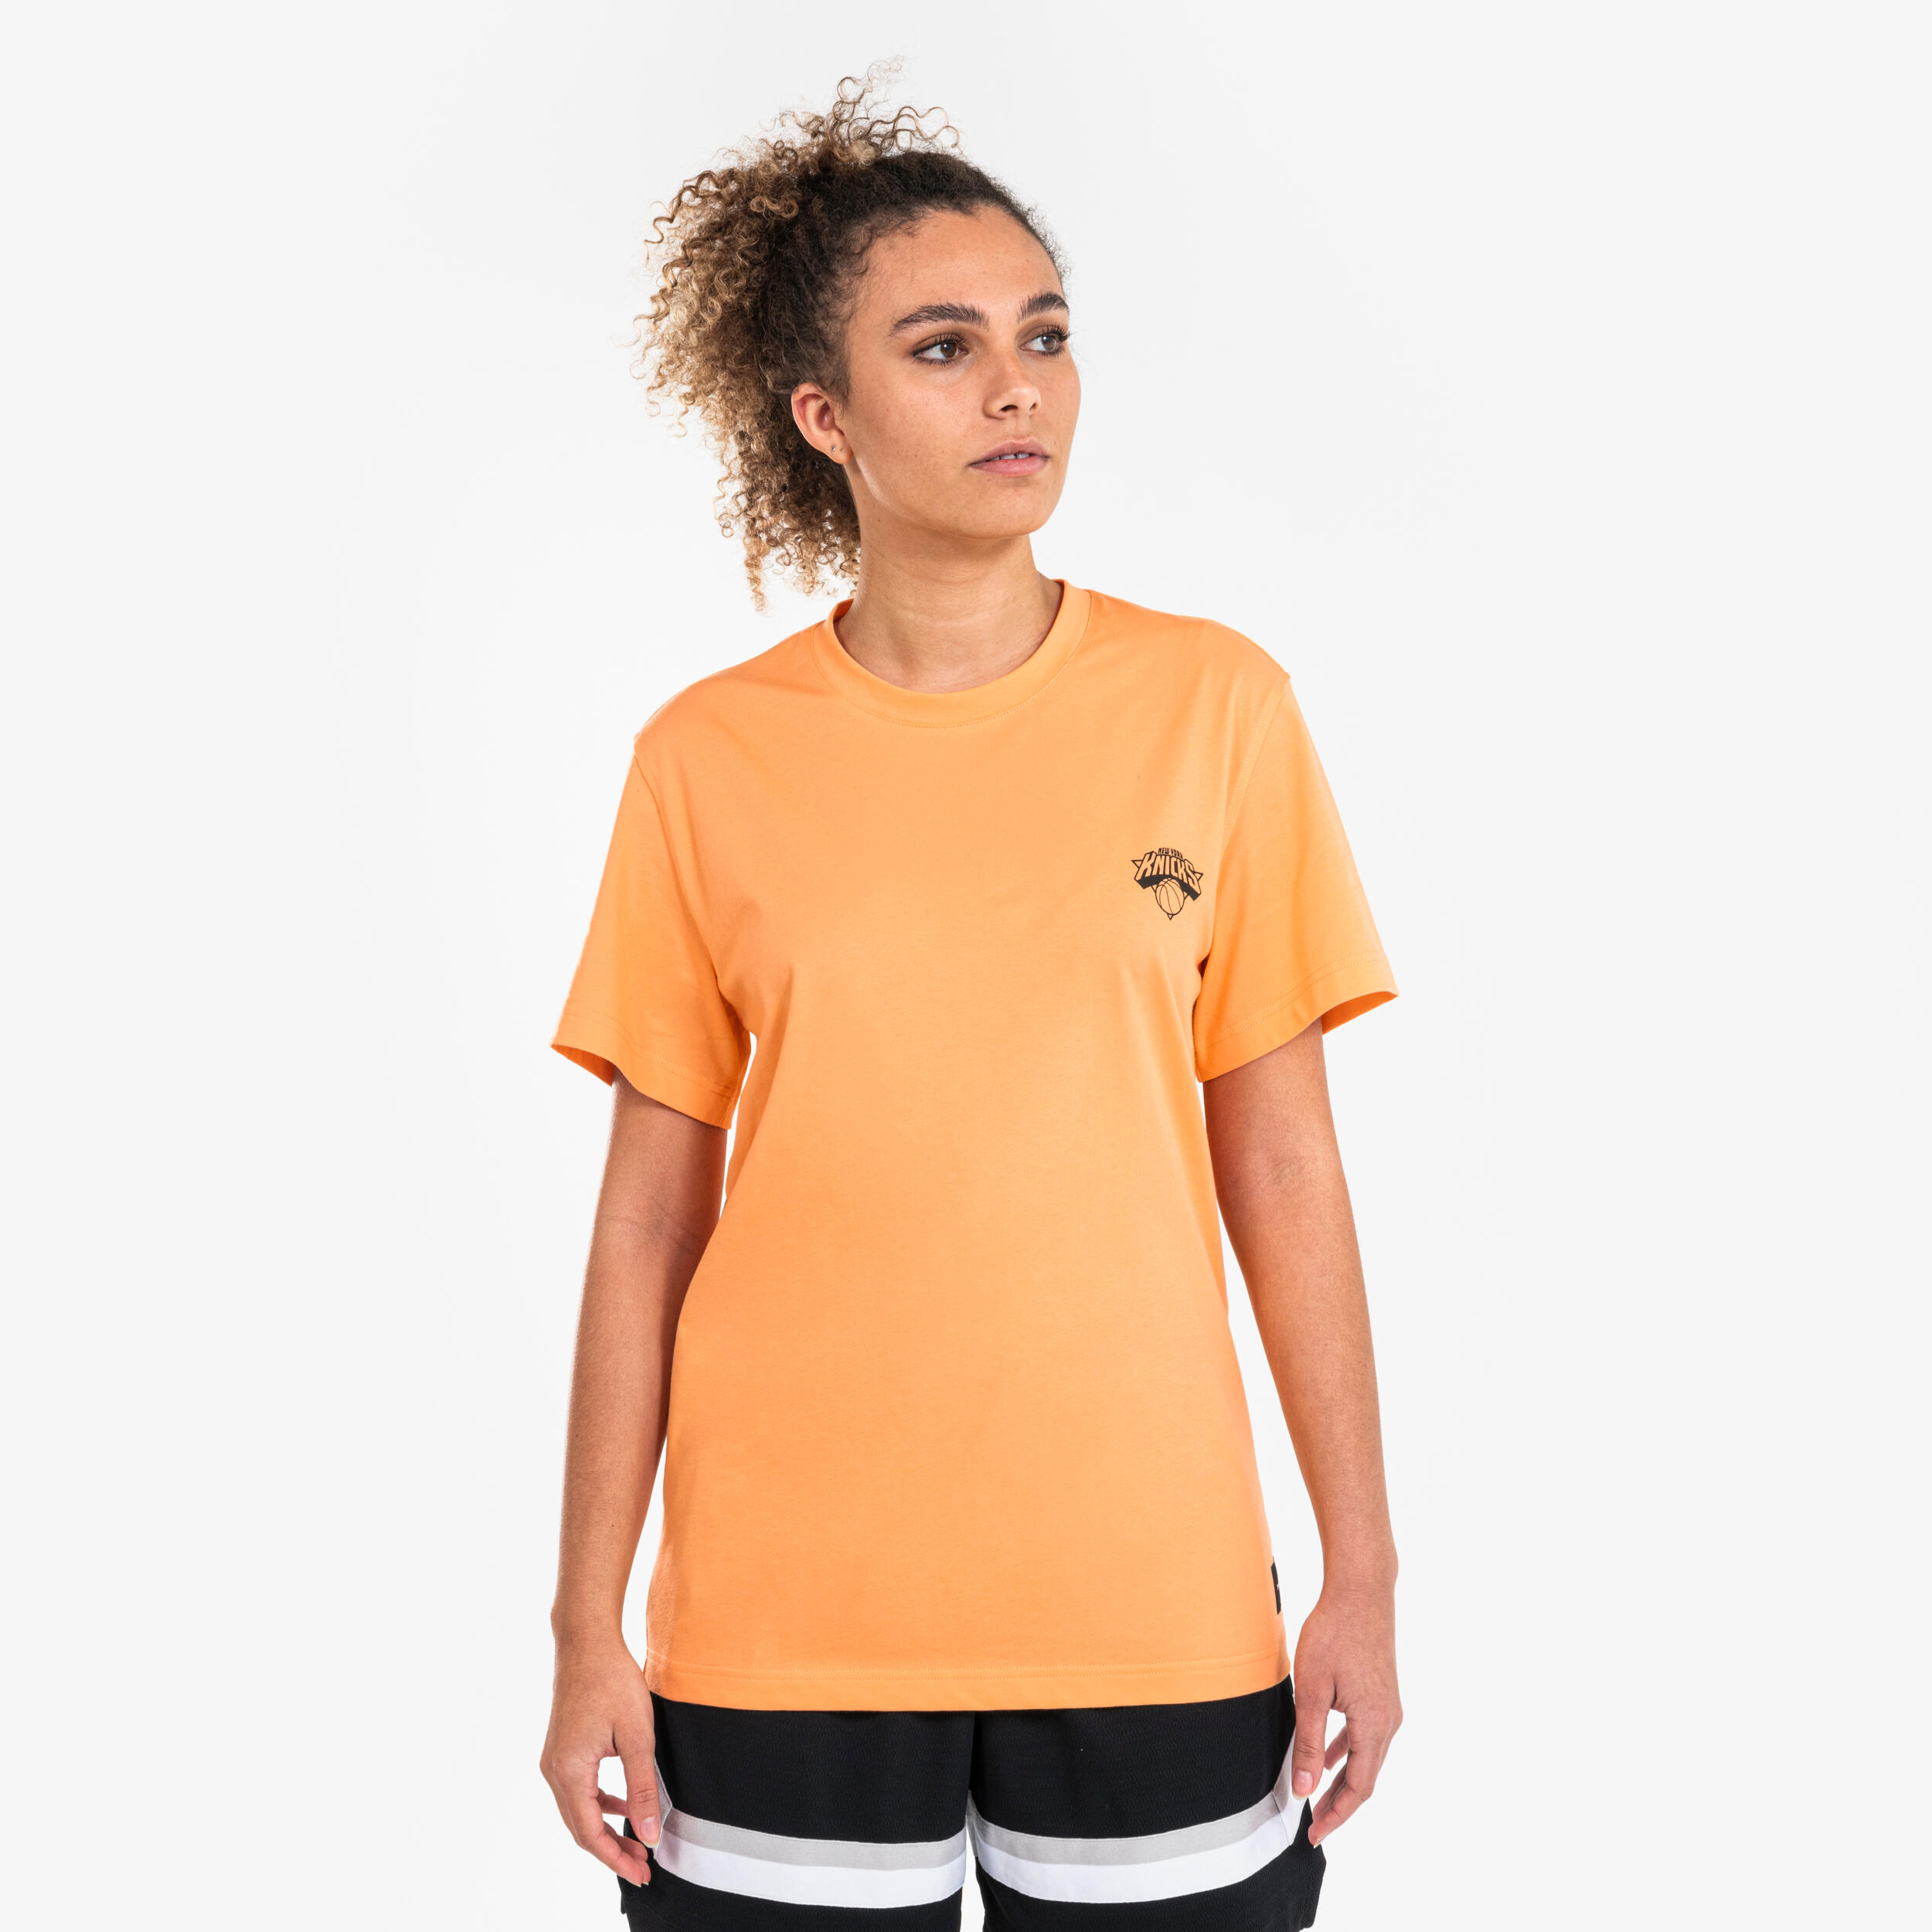 Unisex Basketball T-Shirt 900 AD - NBA Knicks/Orange 4/8